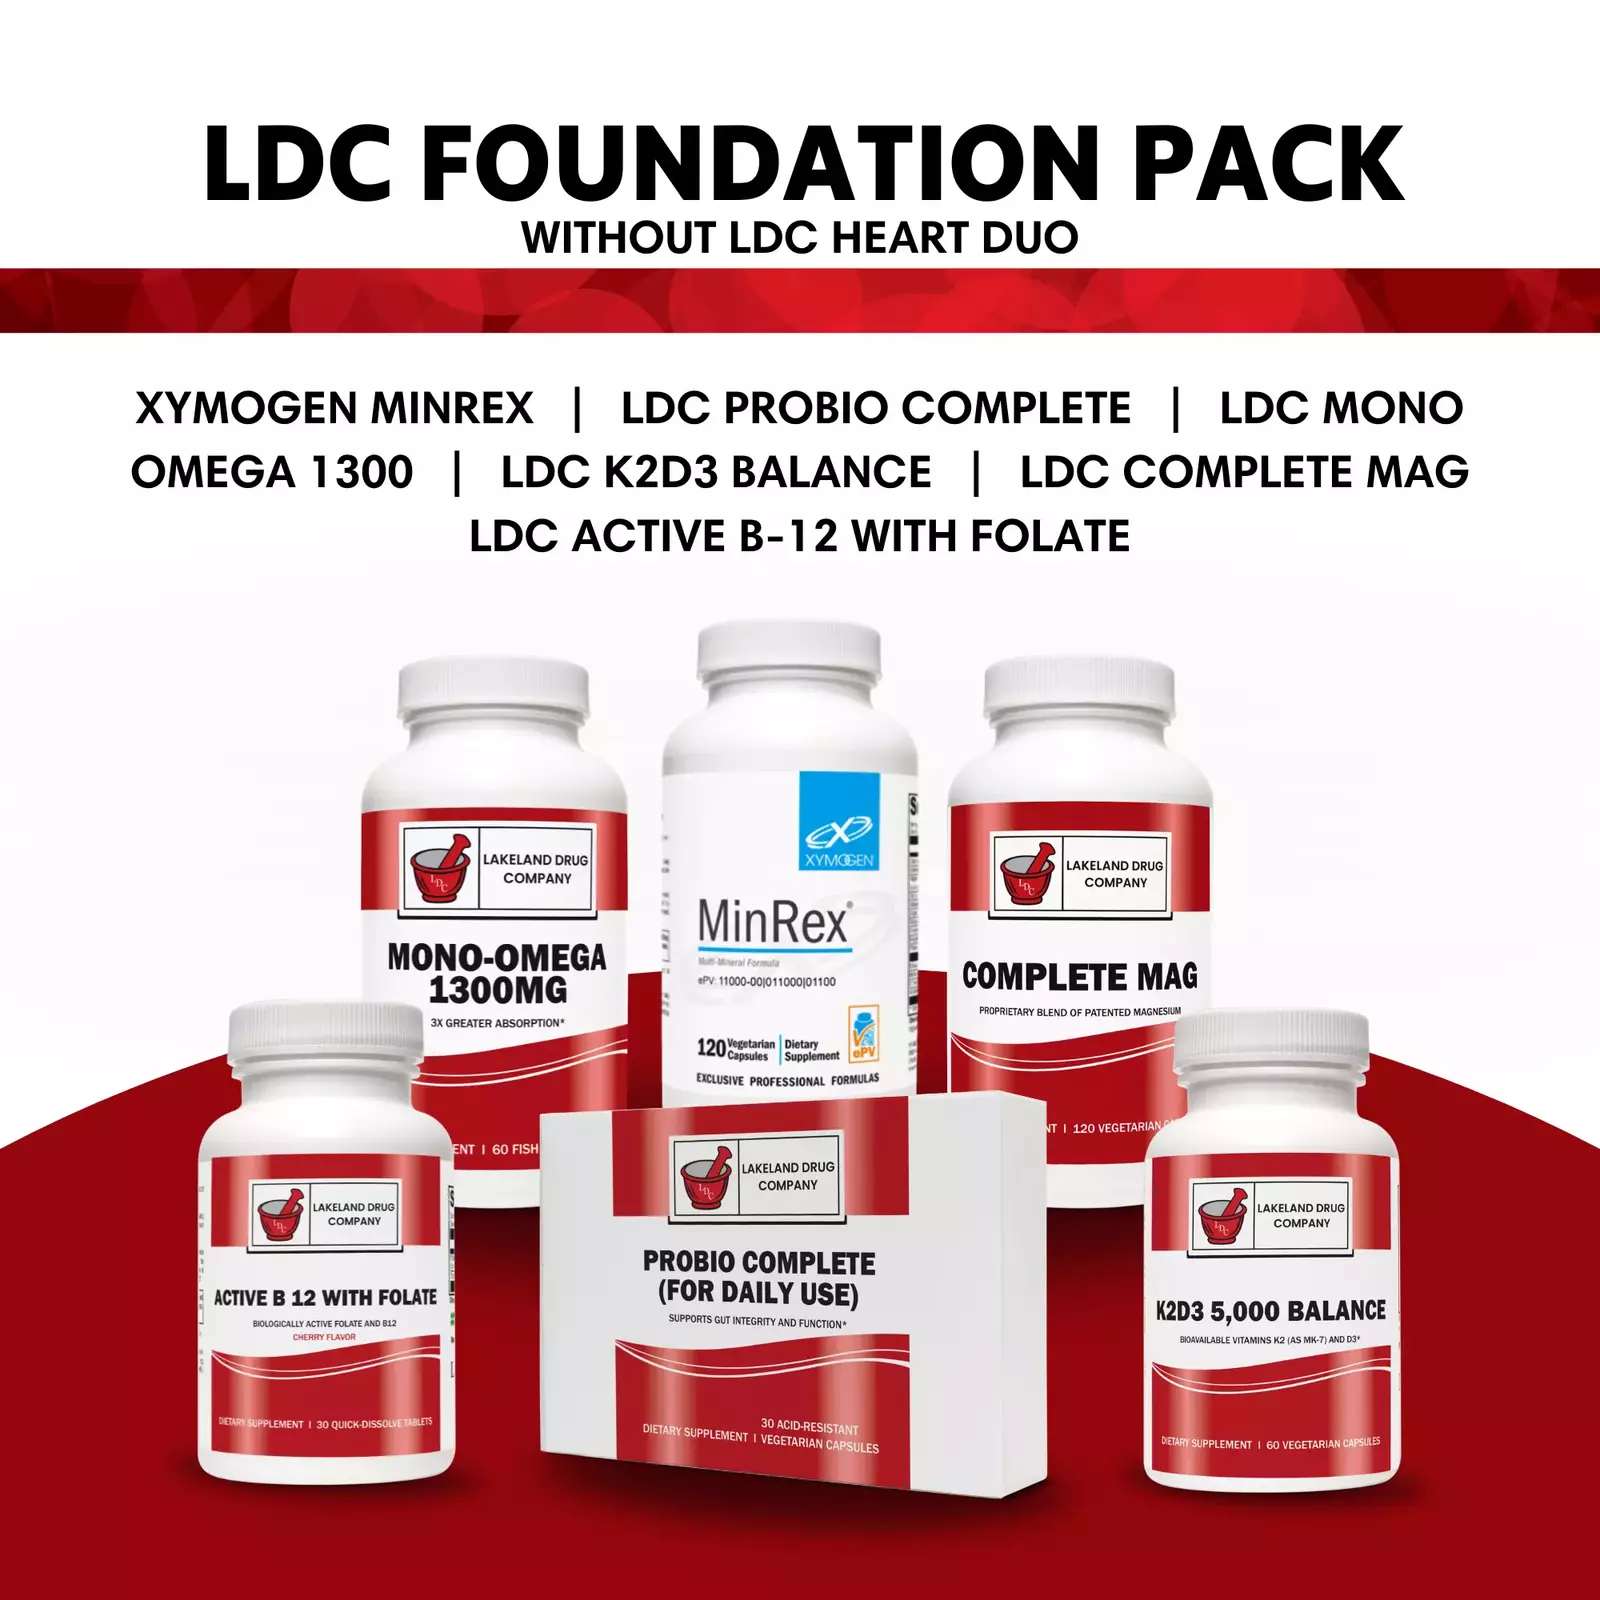 LDC Foundation Pack